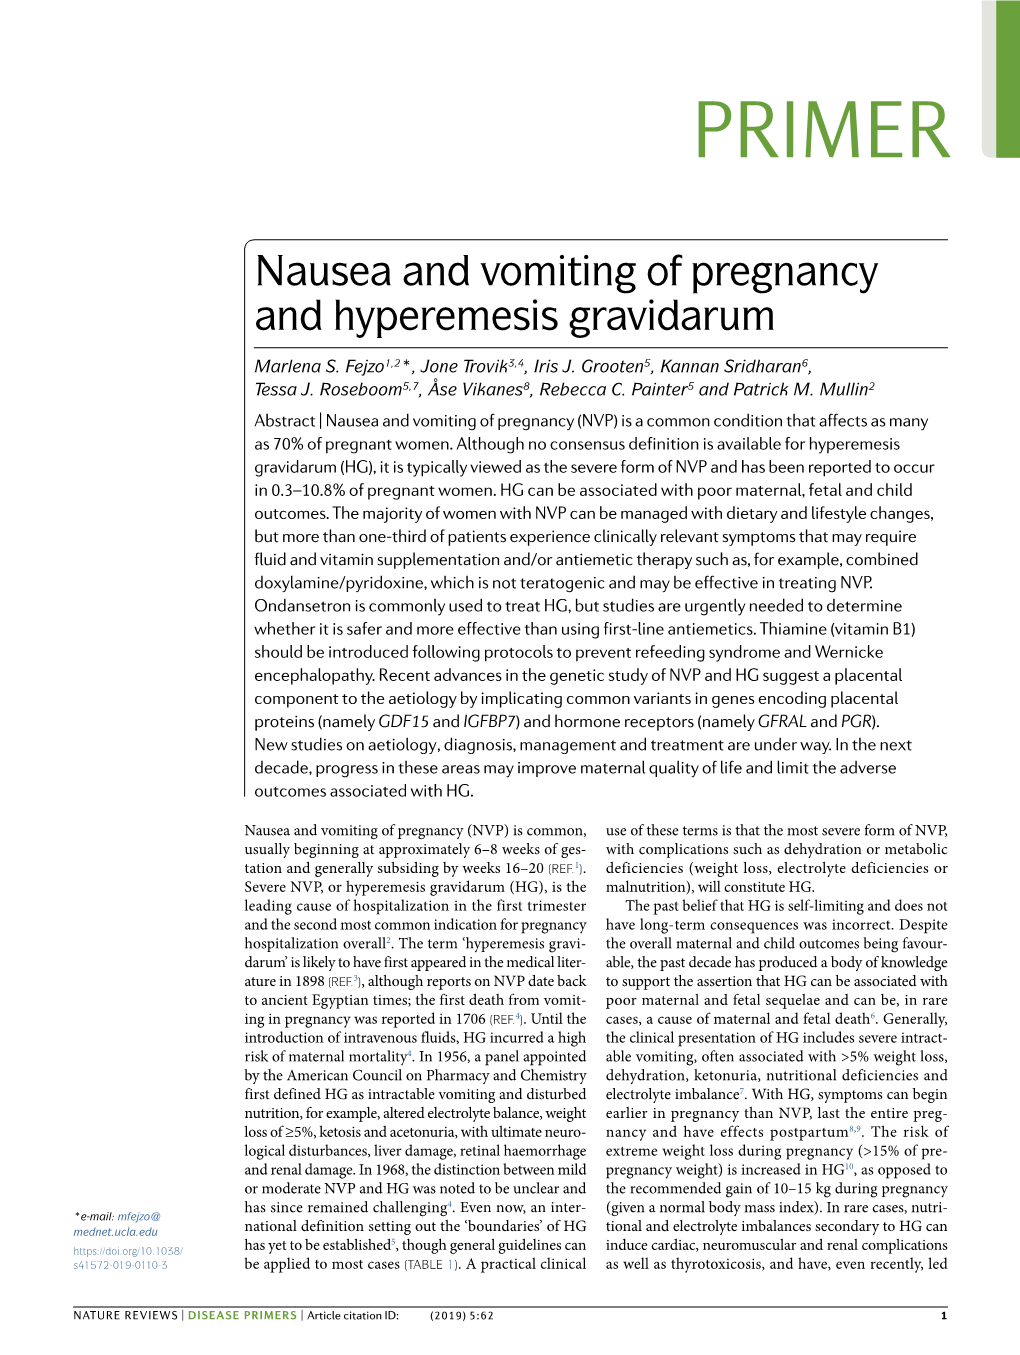 Nausea and Vomiting of Pregnancy and Hyperemesis Gravidarum